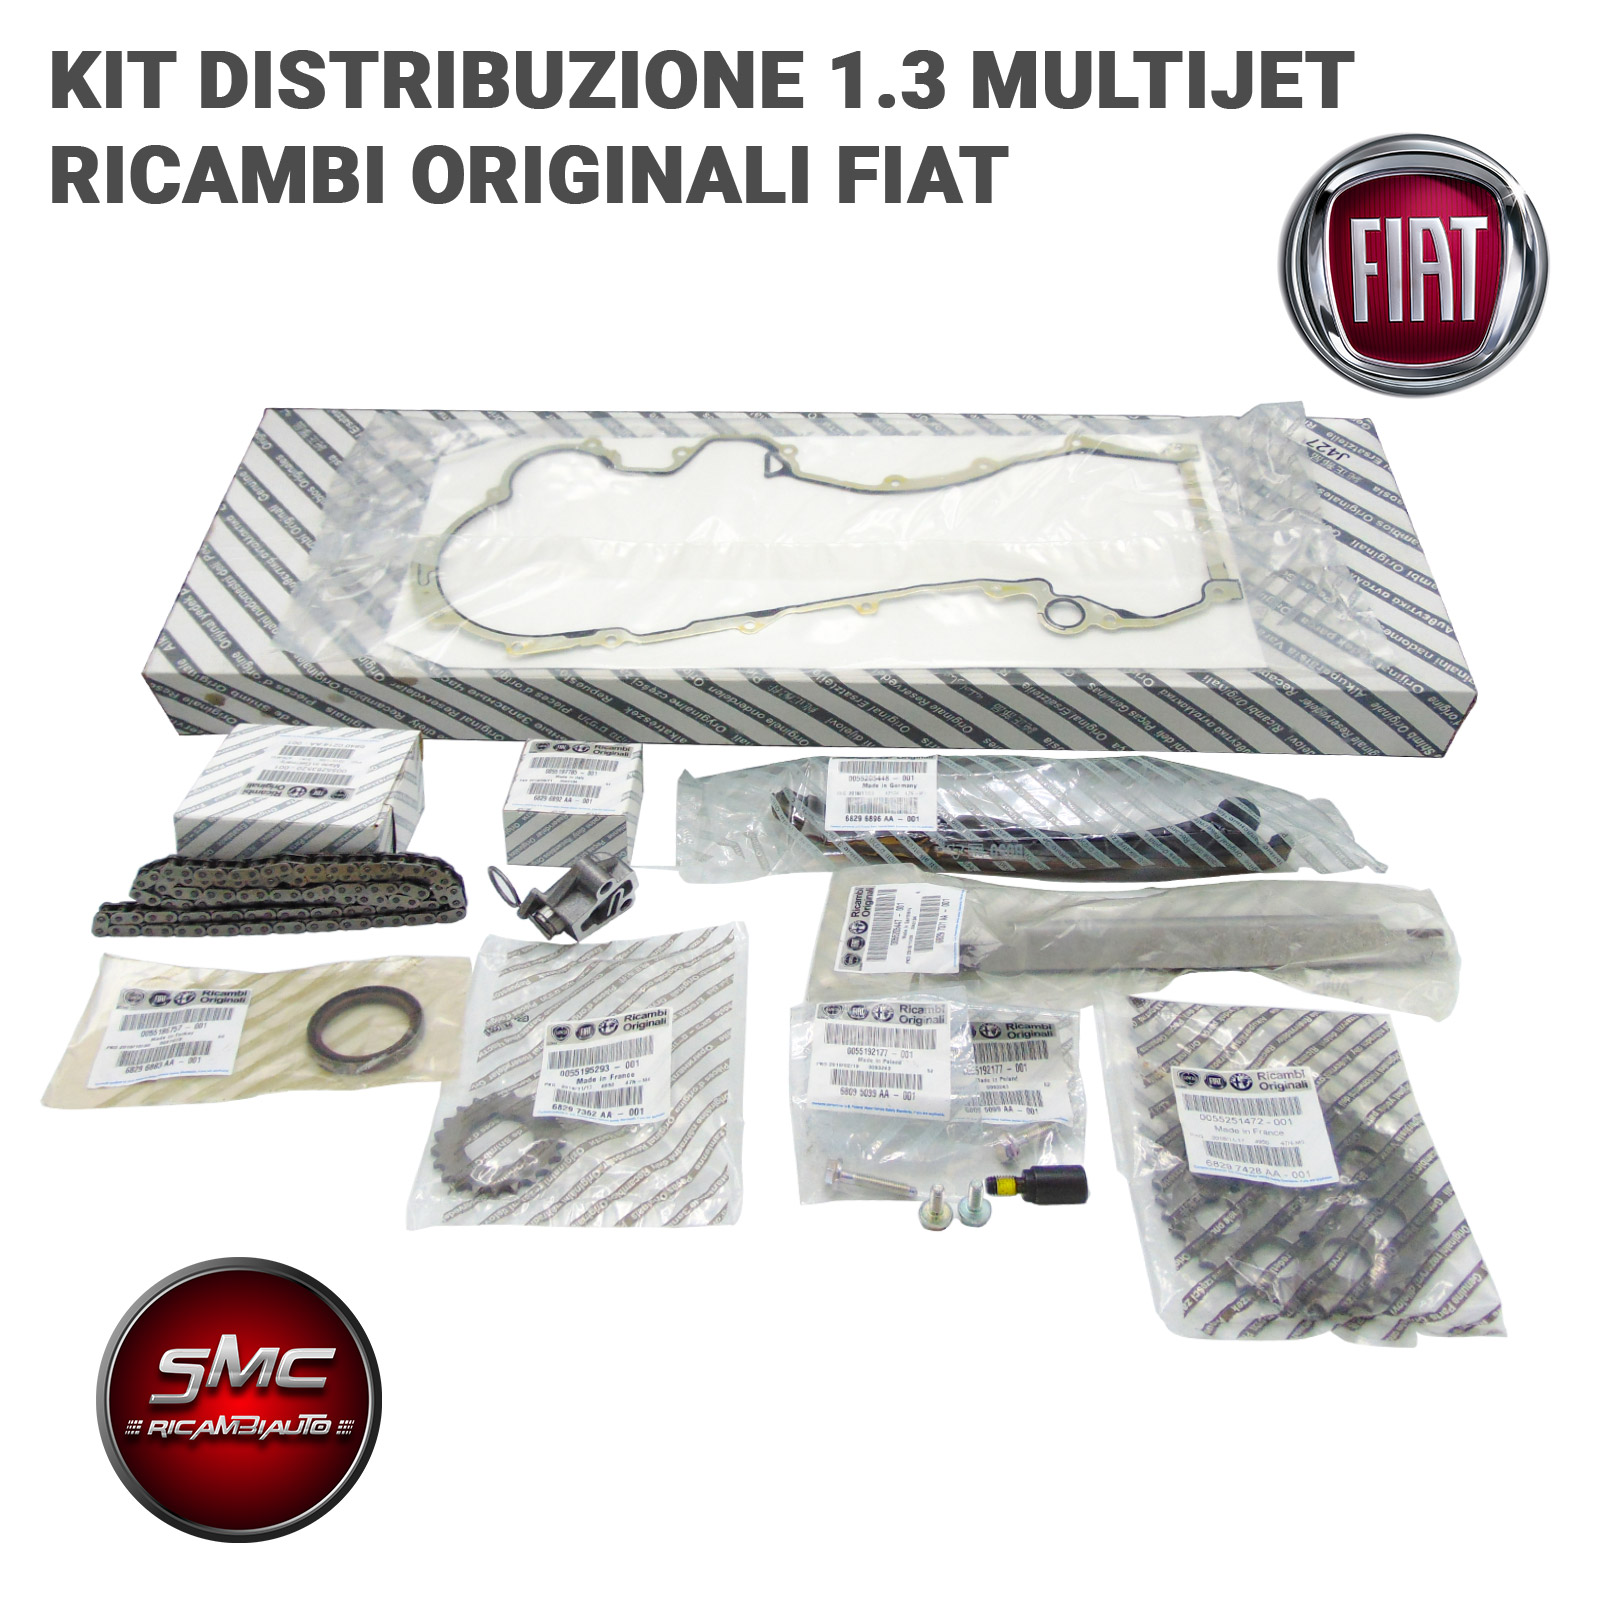 Kit Catena Distribuzione 13 PZ Fiat Originale 1.3 Multijet Fiat Punto Panda 500 